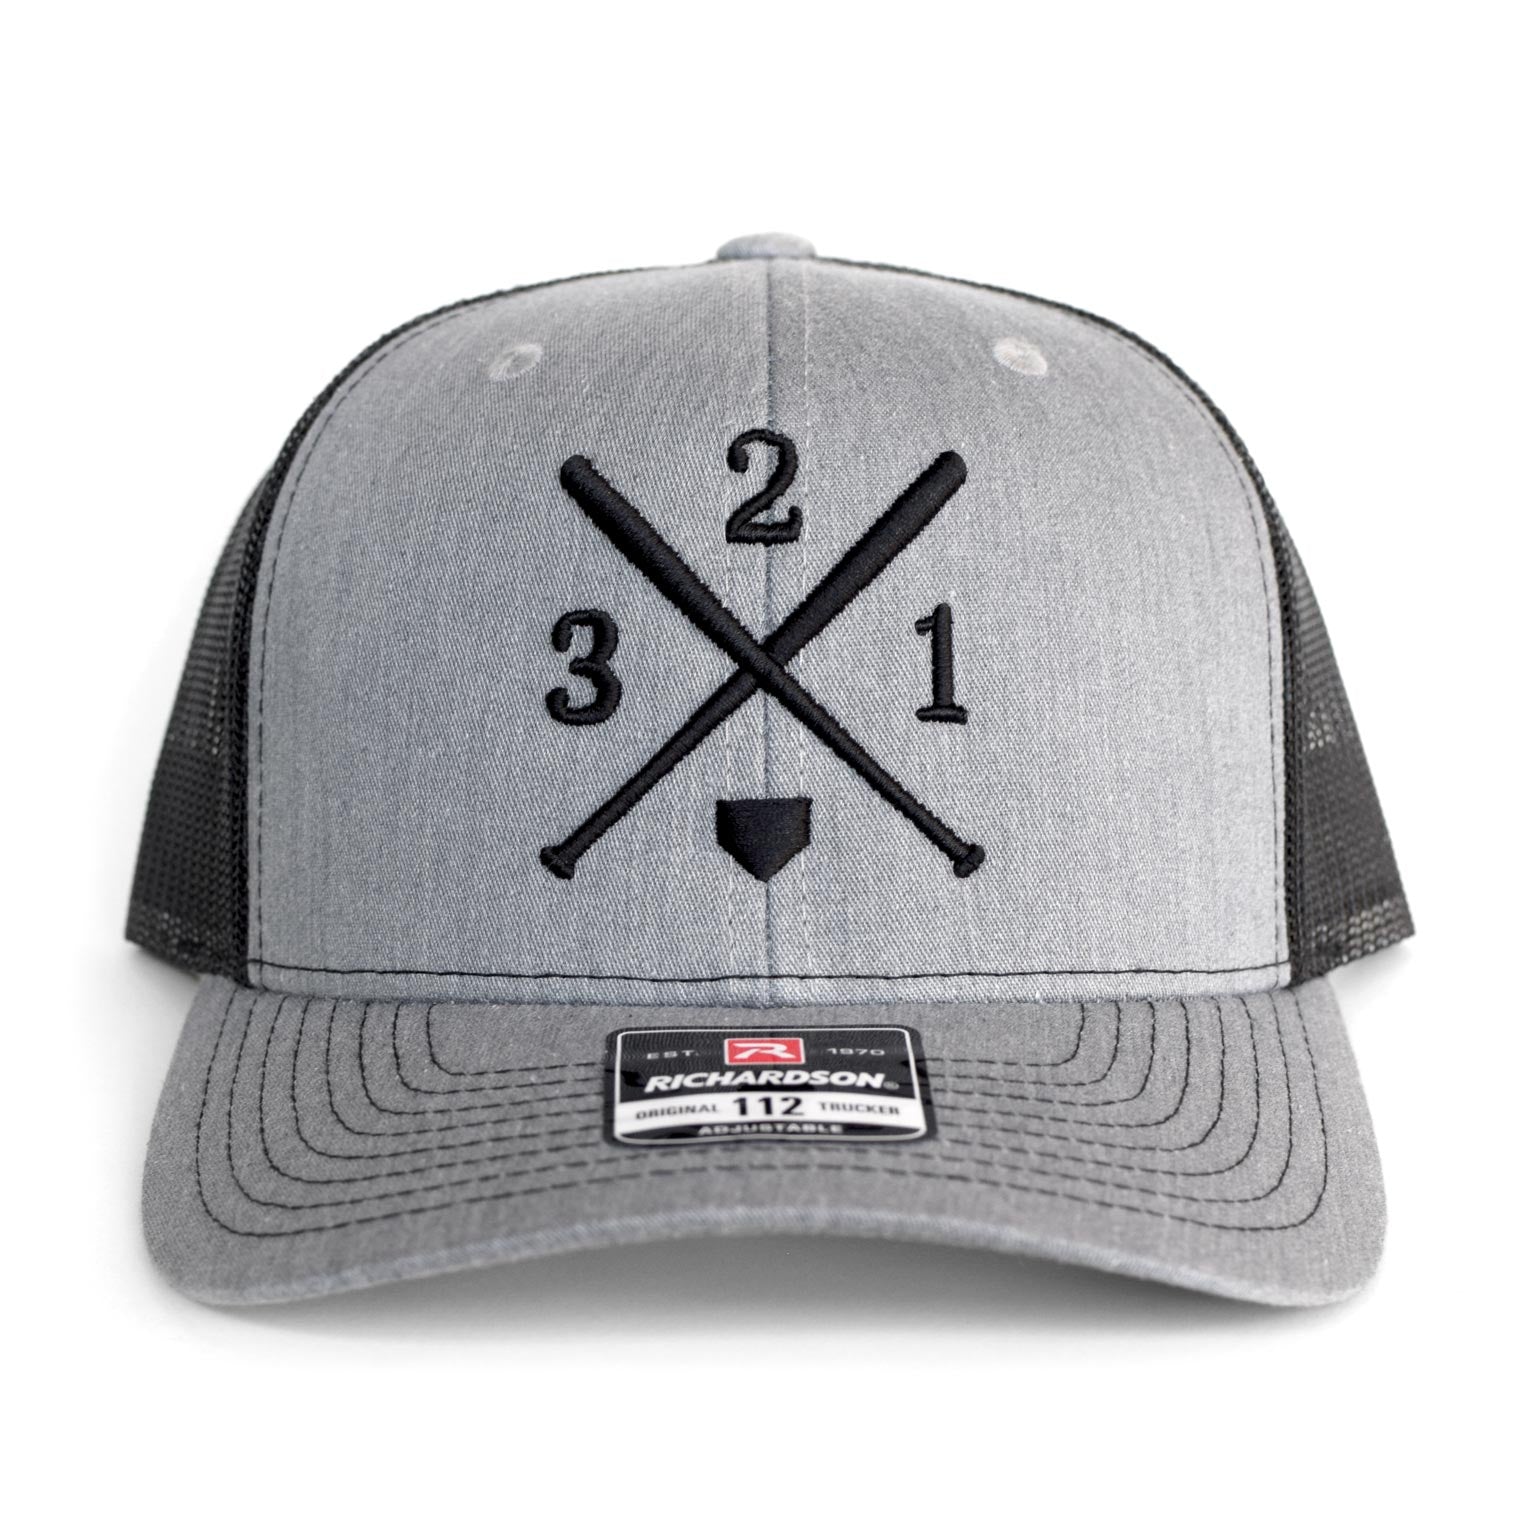 X-tra Bases Trucker Hat